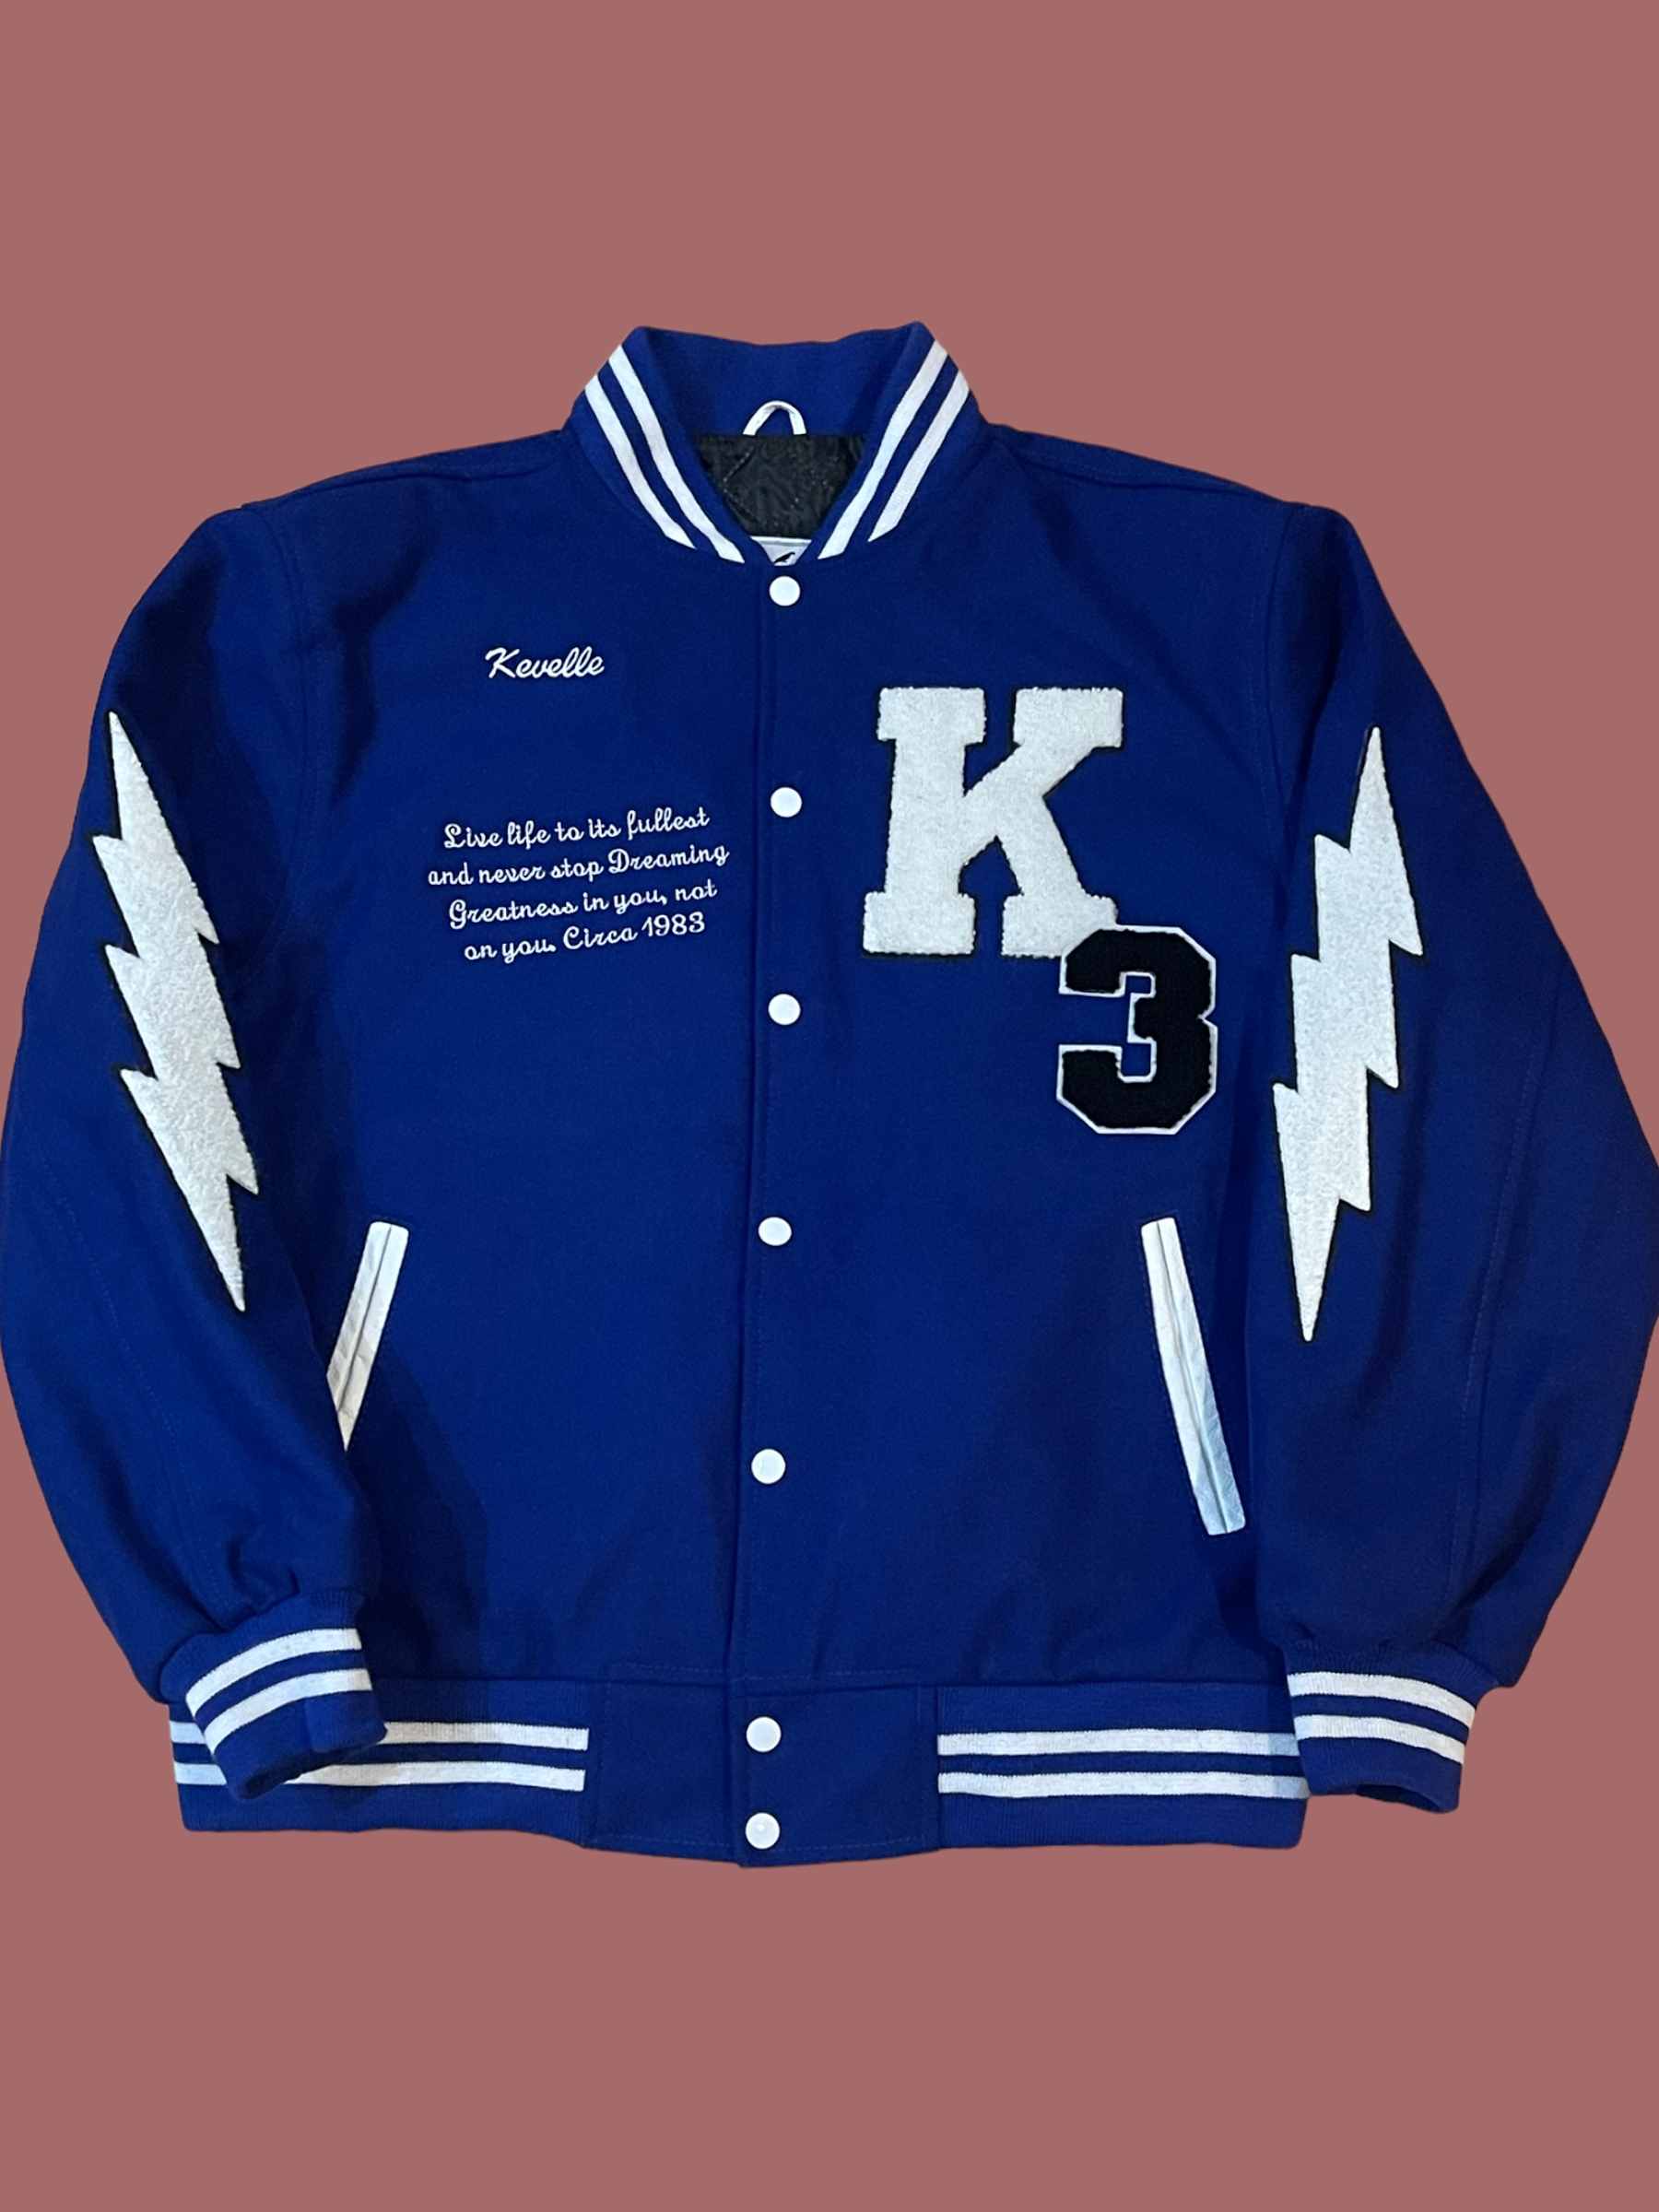 Sanrio Kawaii Mart Denim Varsity Jacket - BoxLunch Exclusive | BoxLunch